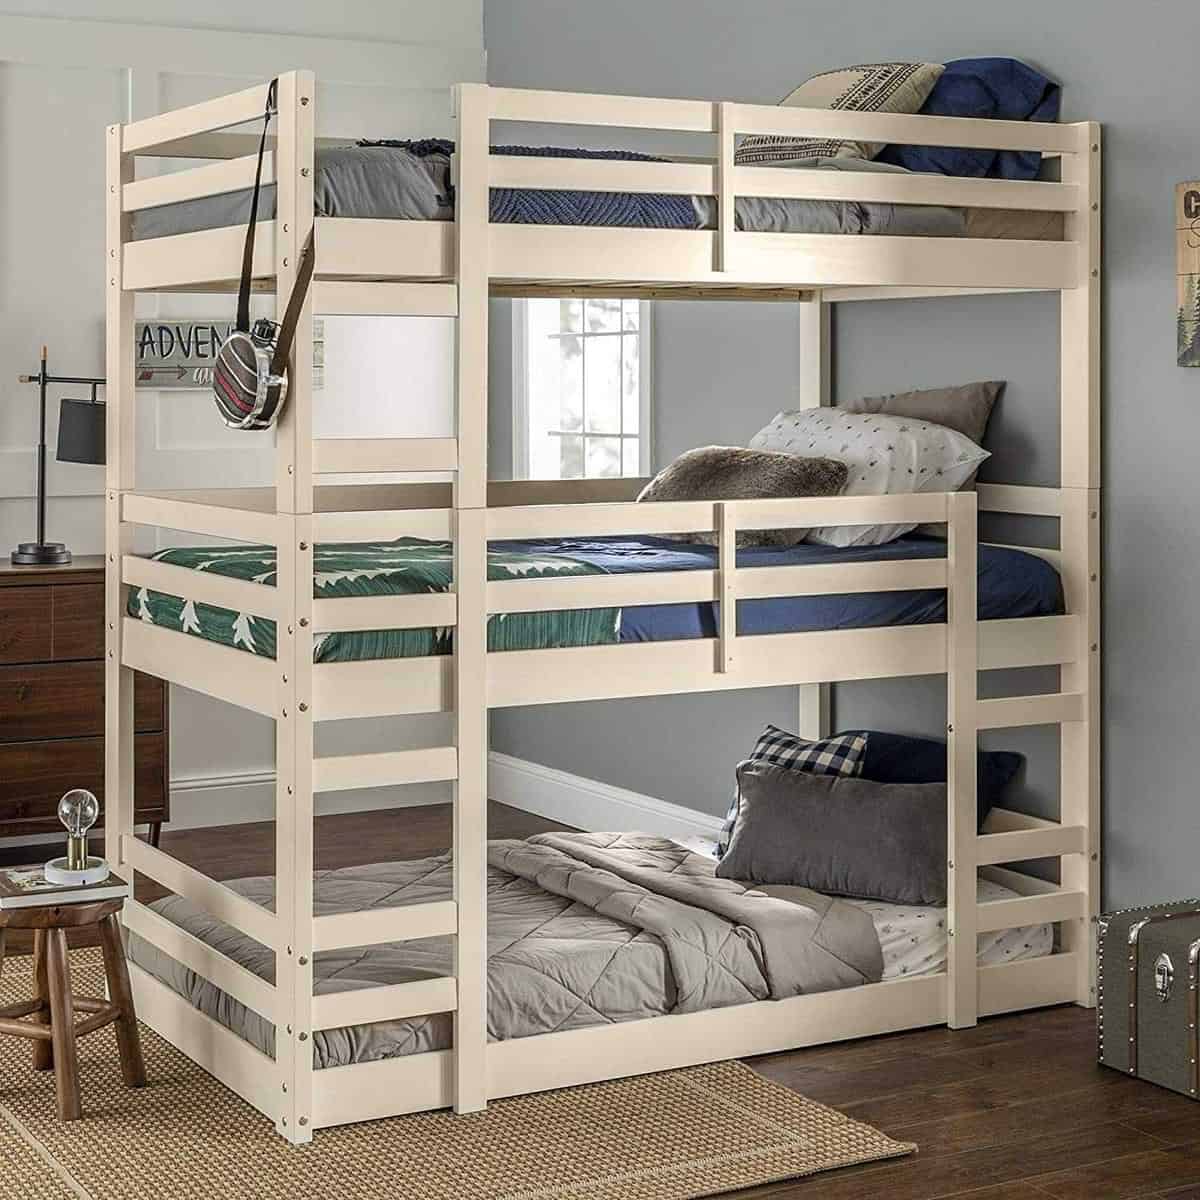 Bedroom furniture with triple sleeper